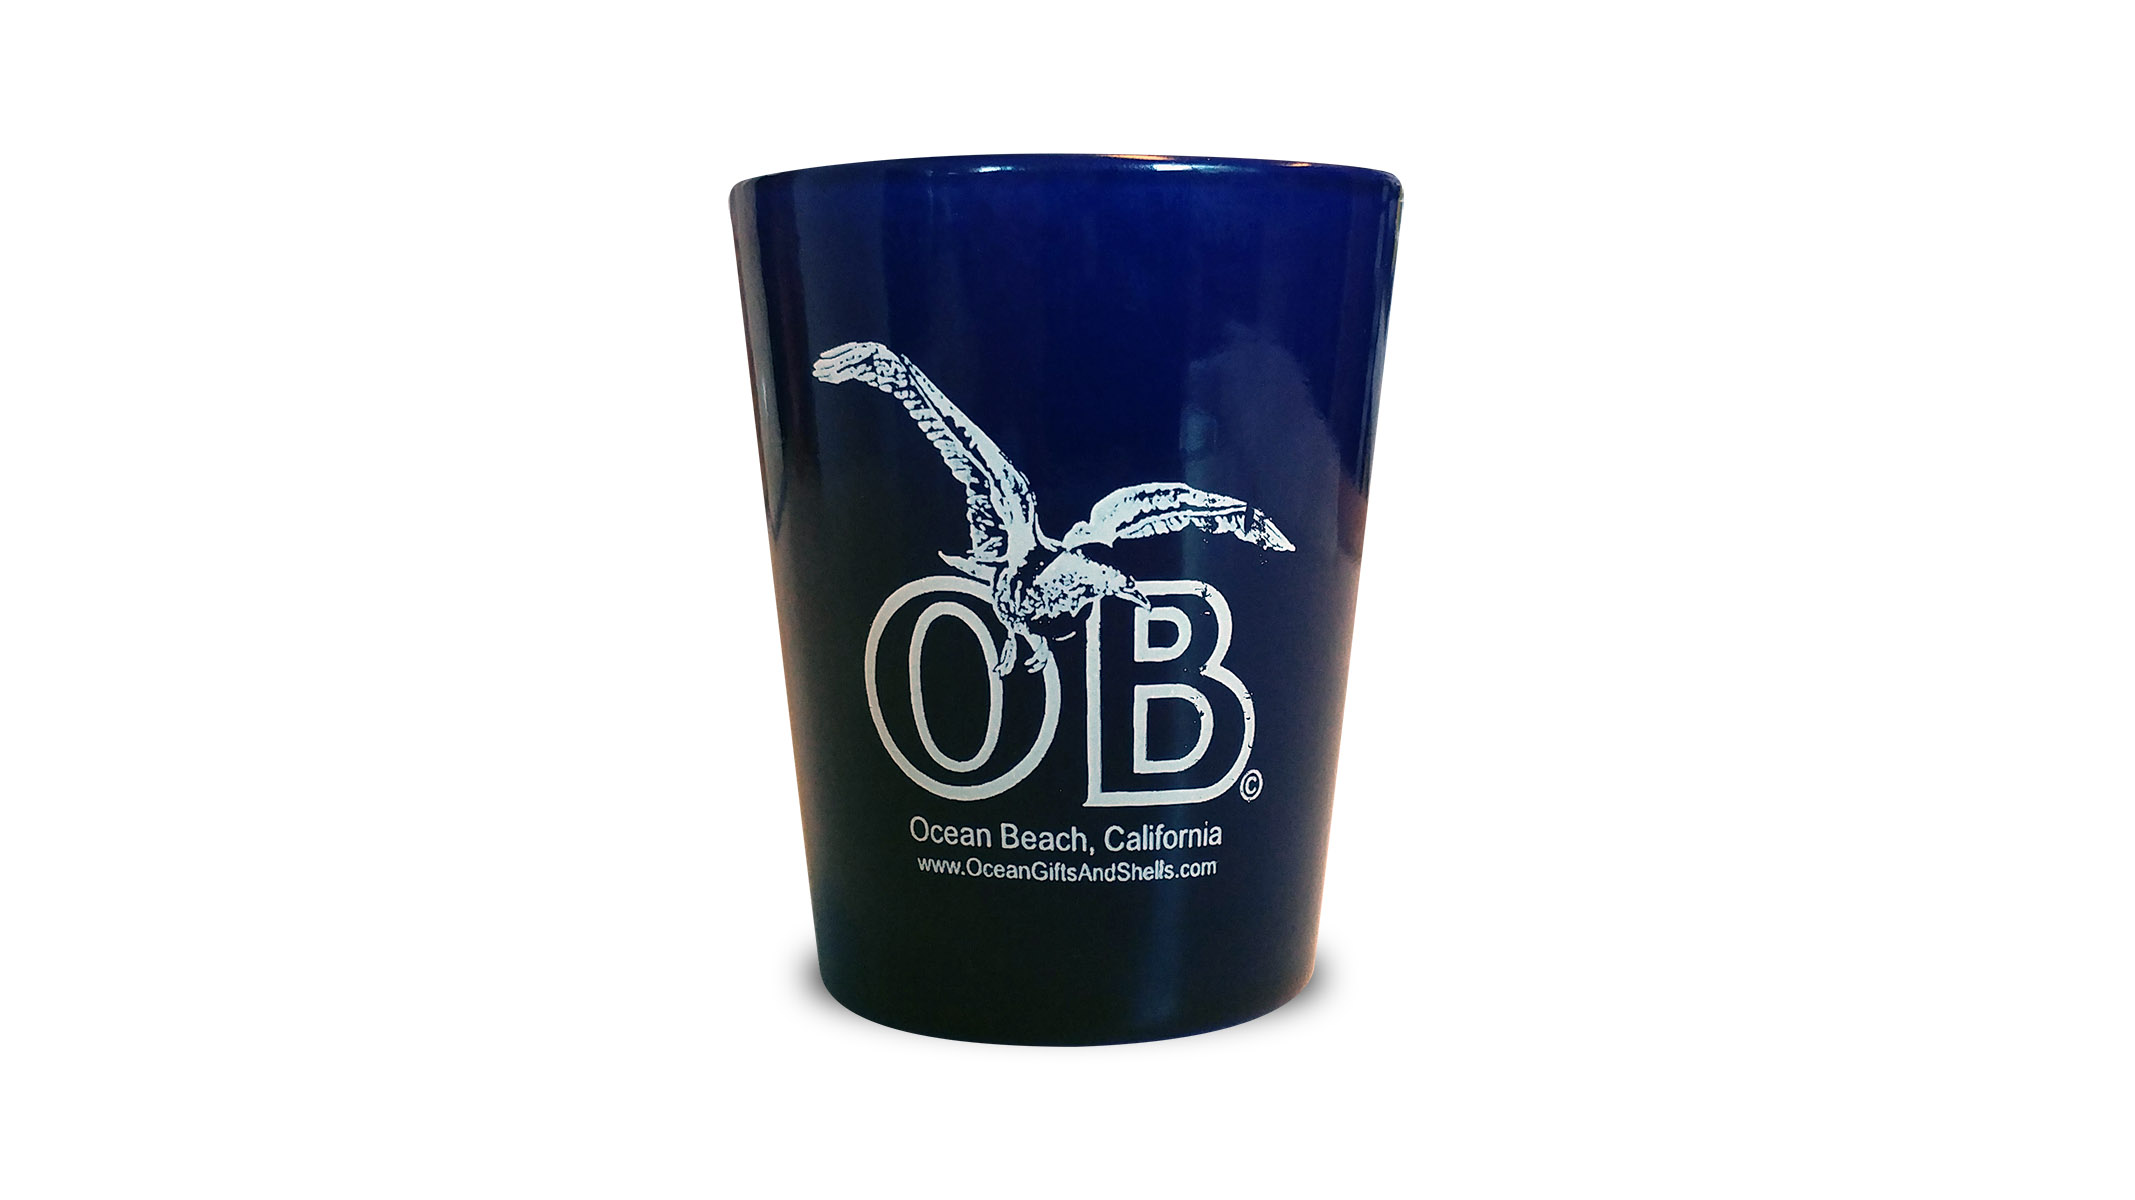 Ocean Beach Product: OB Seagull Shot Glass